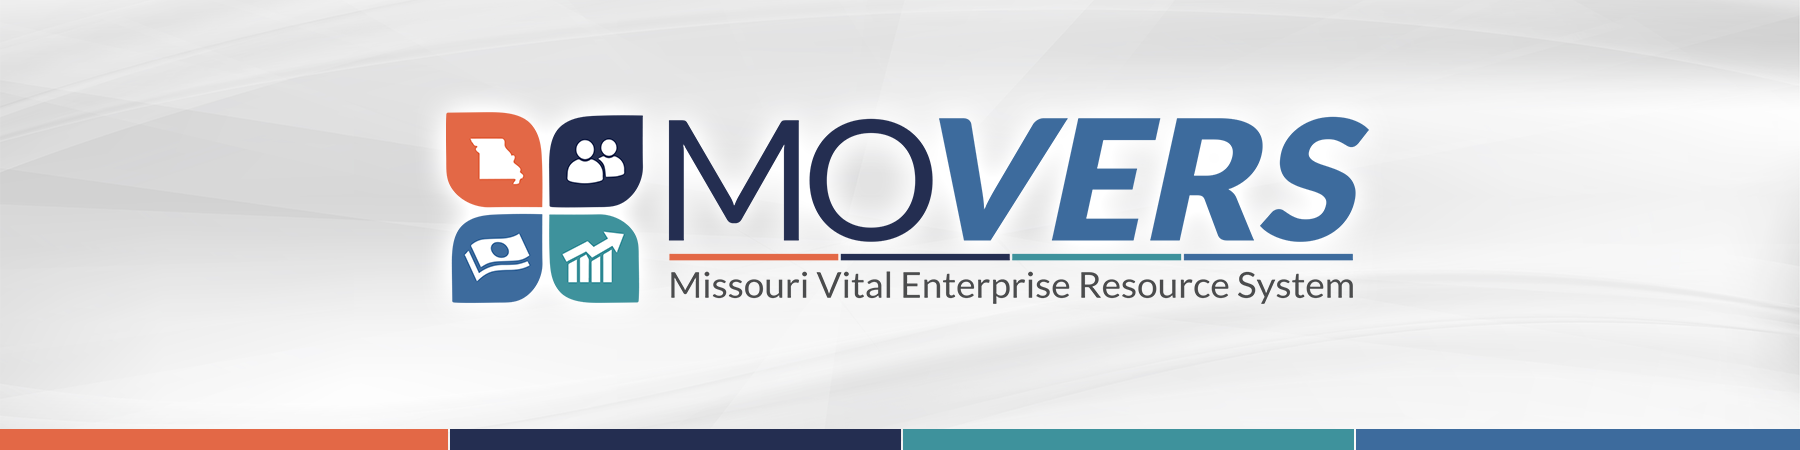 MOVERS - Missouri Vital Enterprise Resource System